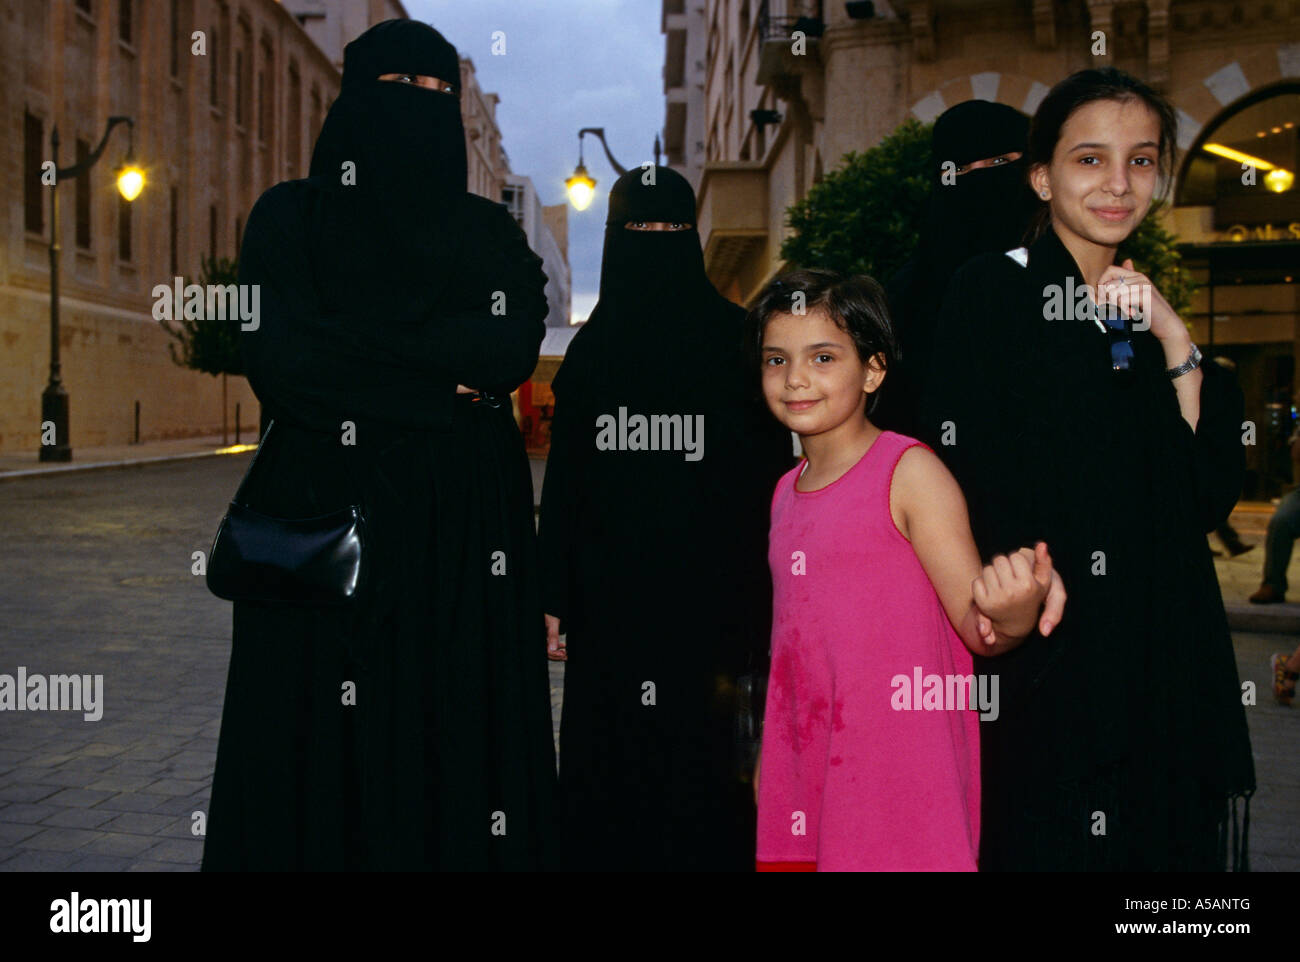 Saudi tourists in Beirut Lebanon Stock Photo